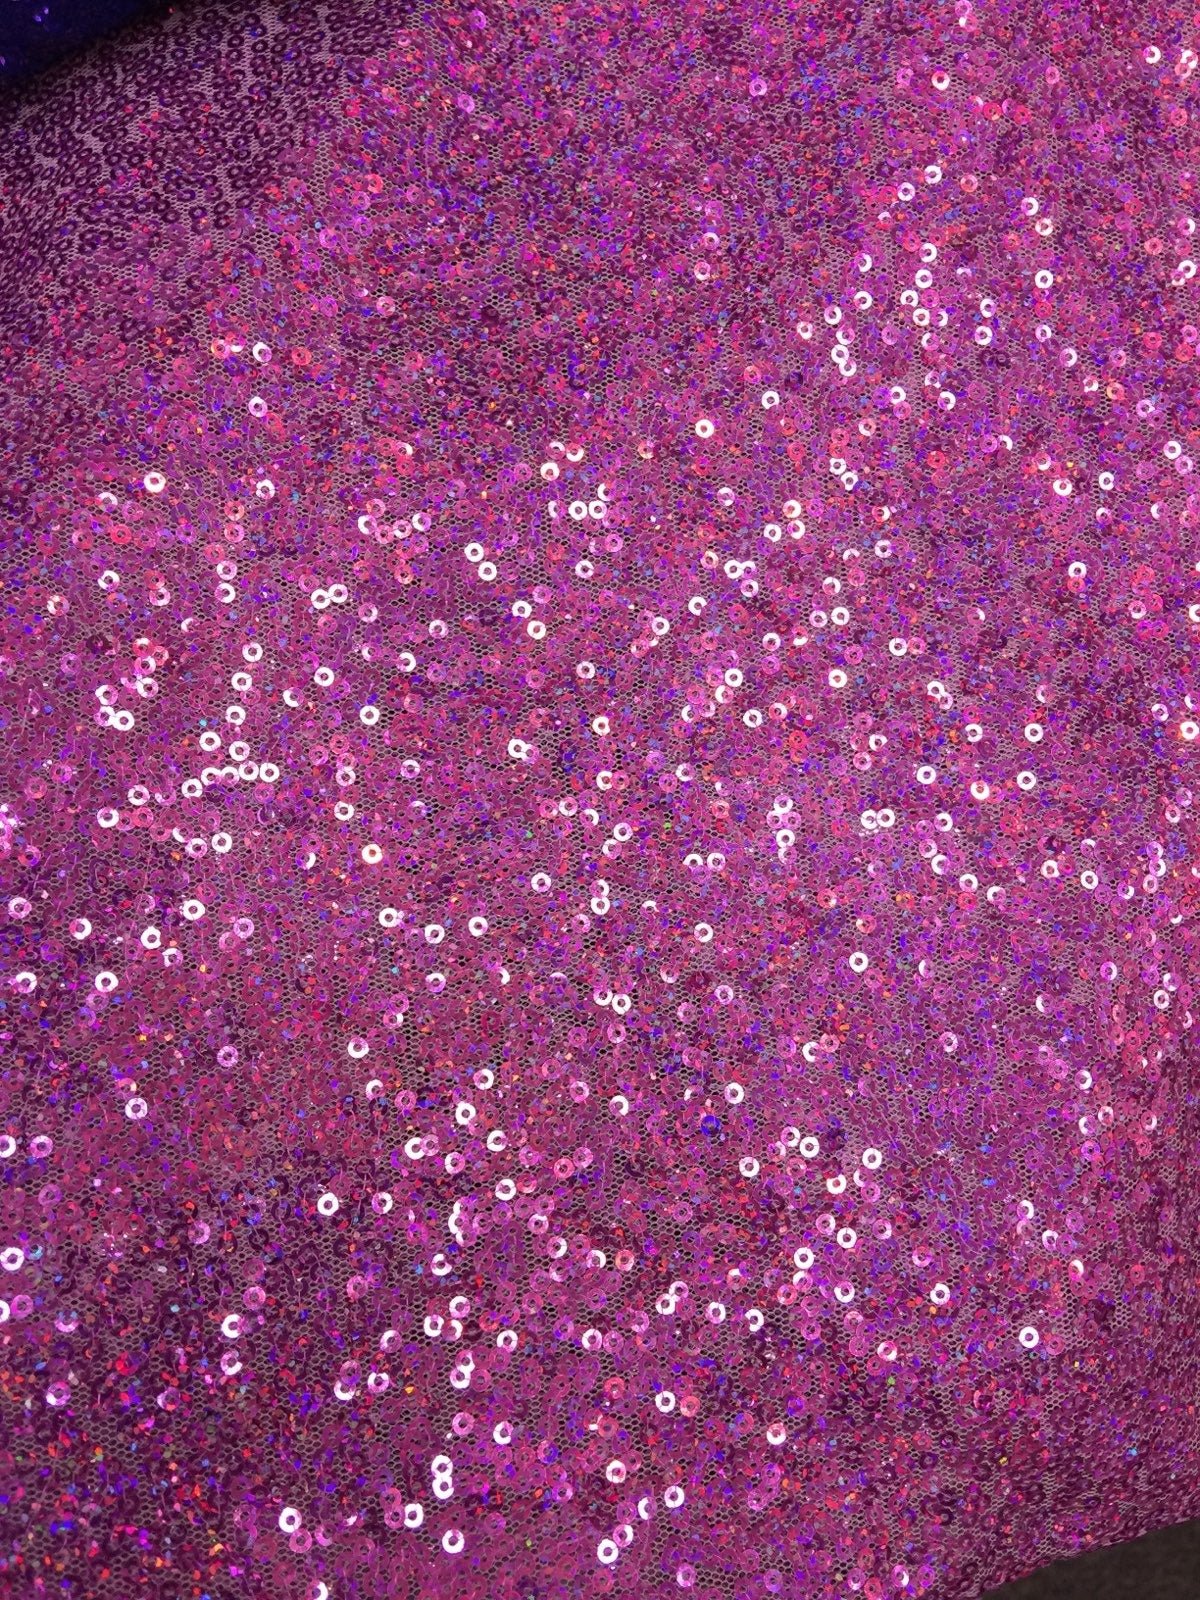 All Over Lavender Iridescent Mesh Glitz Mini Sequins FabricICE FABRICSICE FABRICSPer YardAll Over Lavender Iridescent Mesh Glitz Mini Sequins Fabric ICE FABRICS